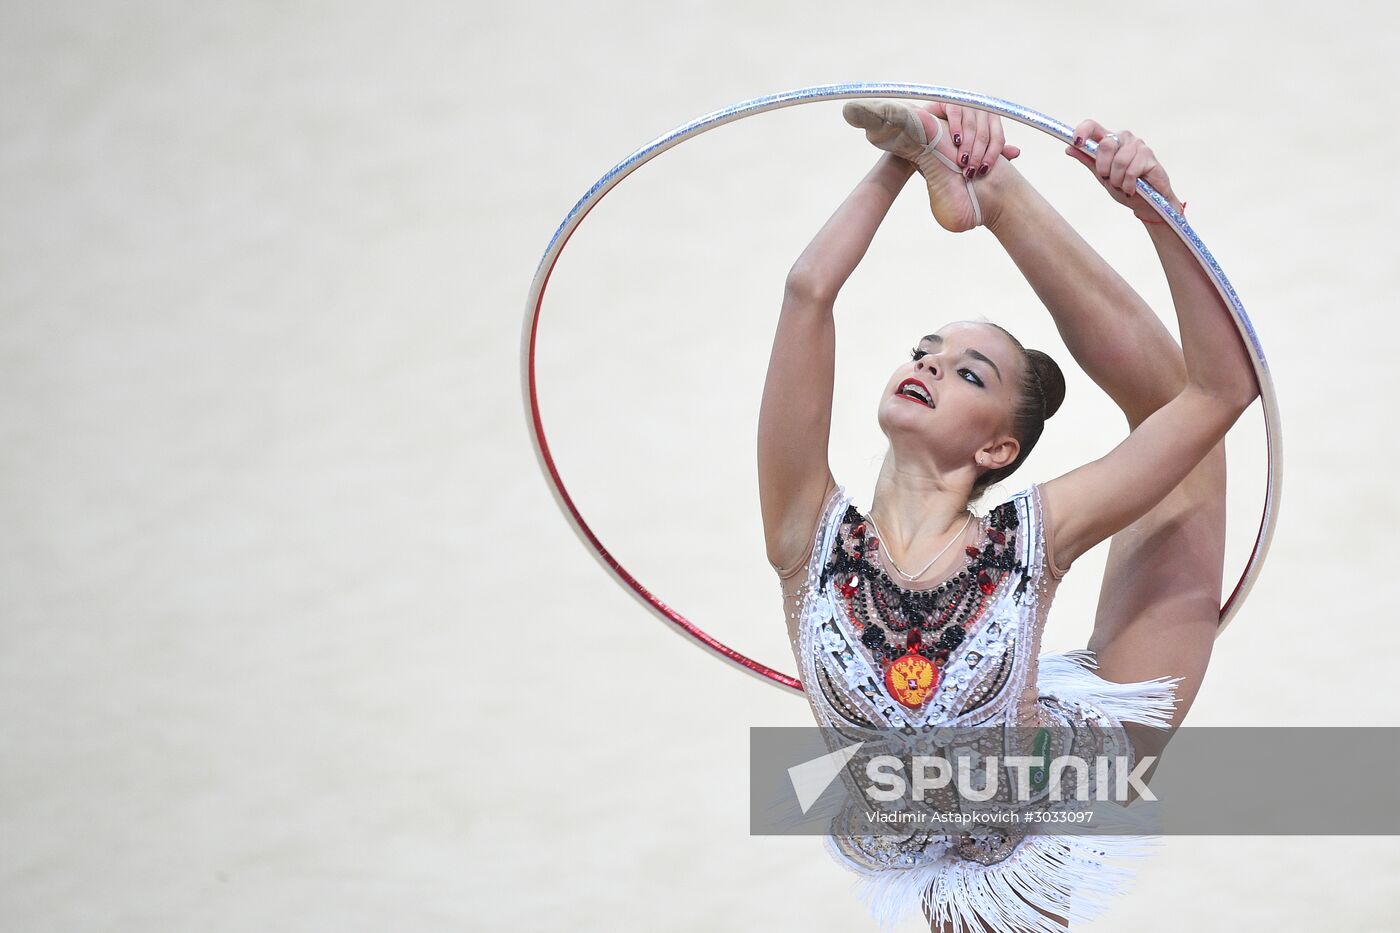 Moscow Grand Prix of rhythmic gymnastics. Individual program finals